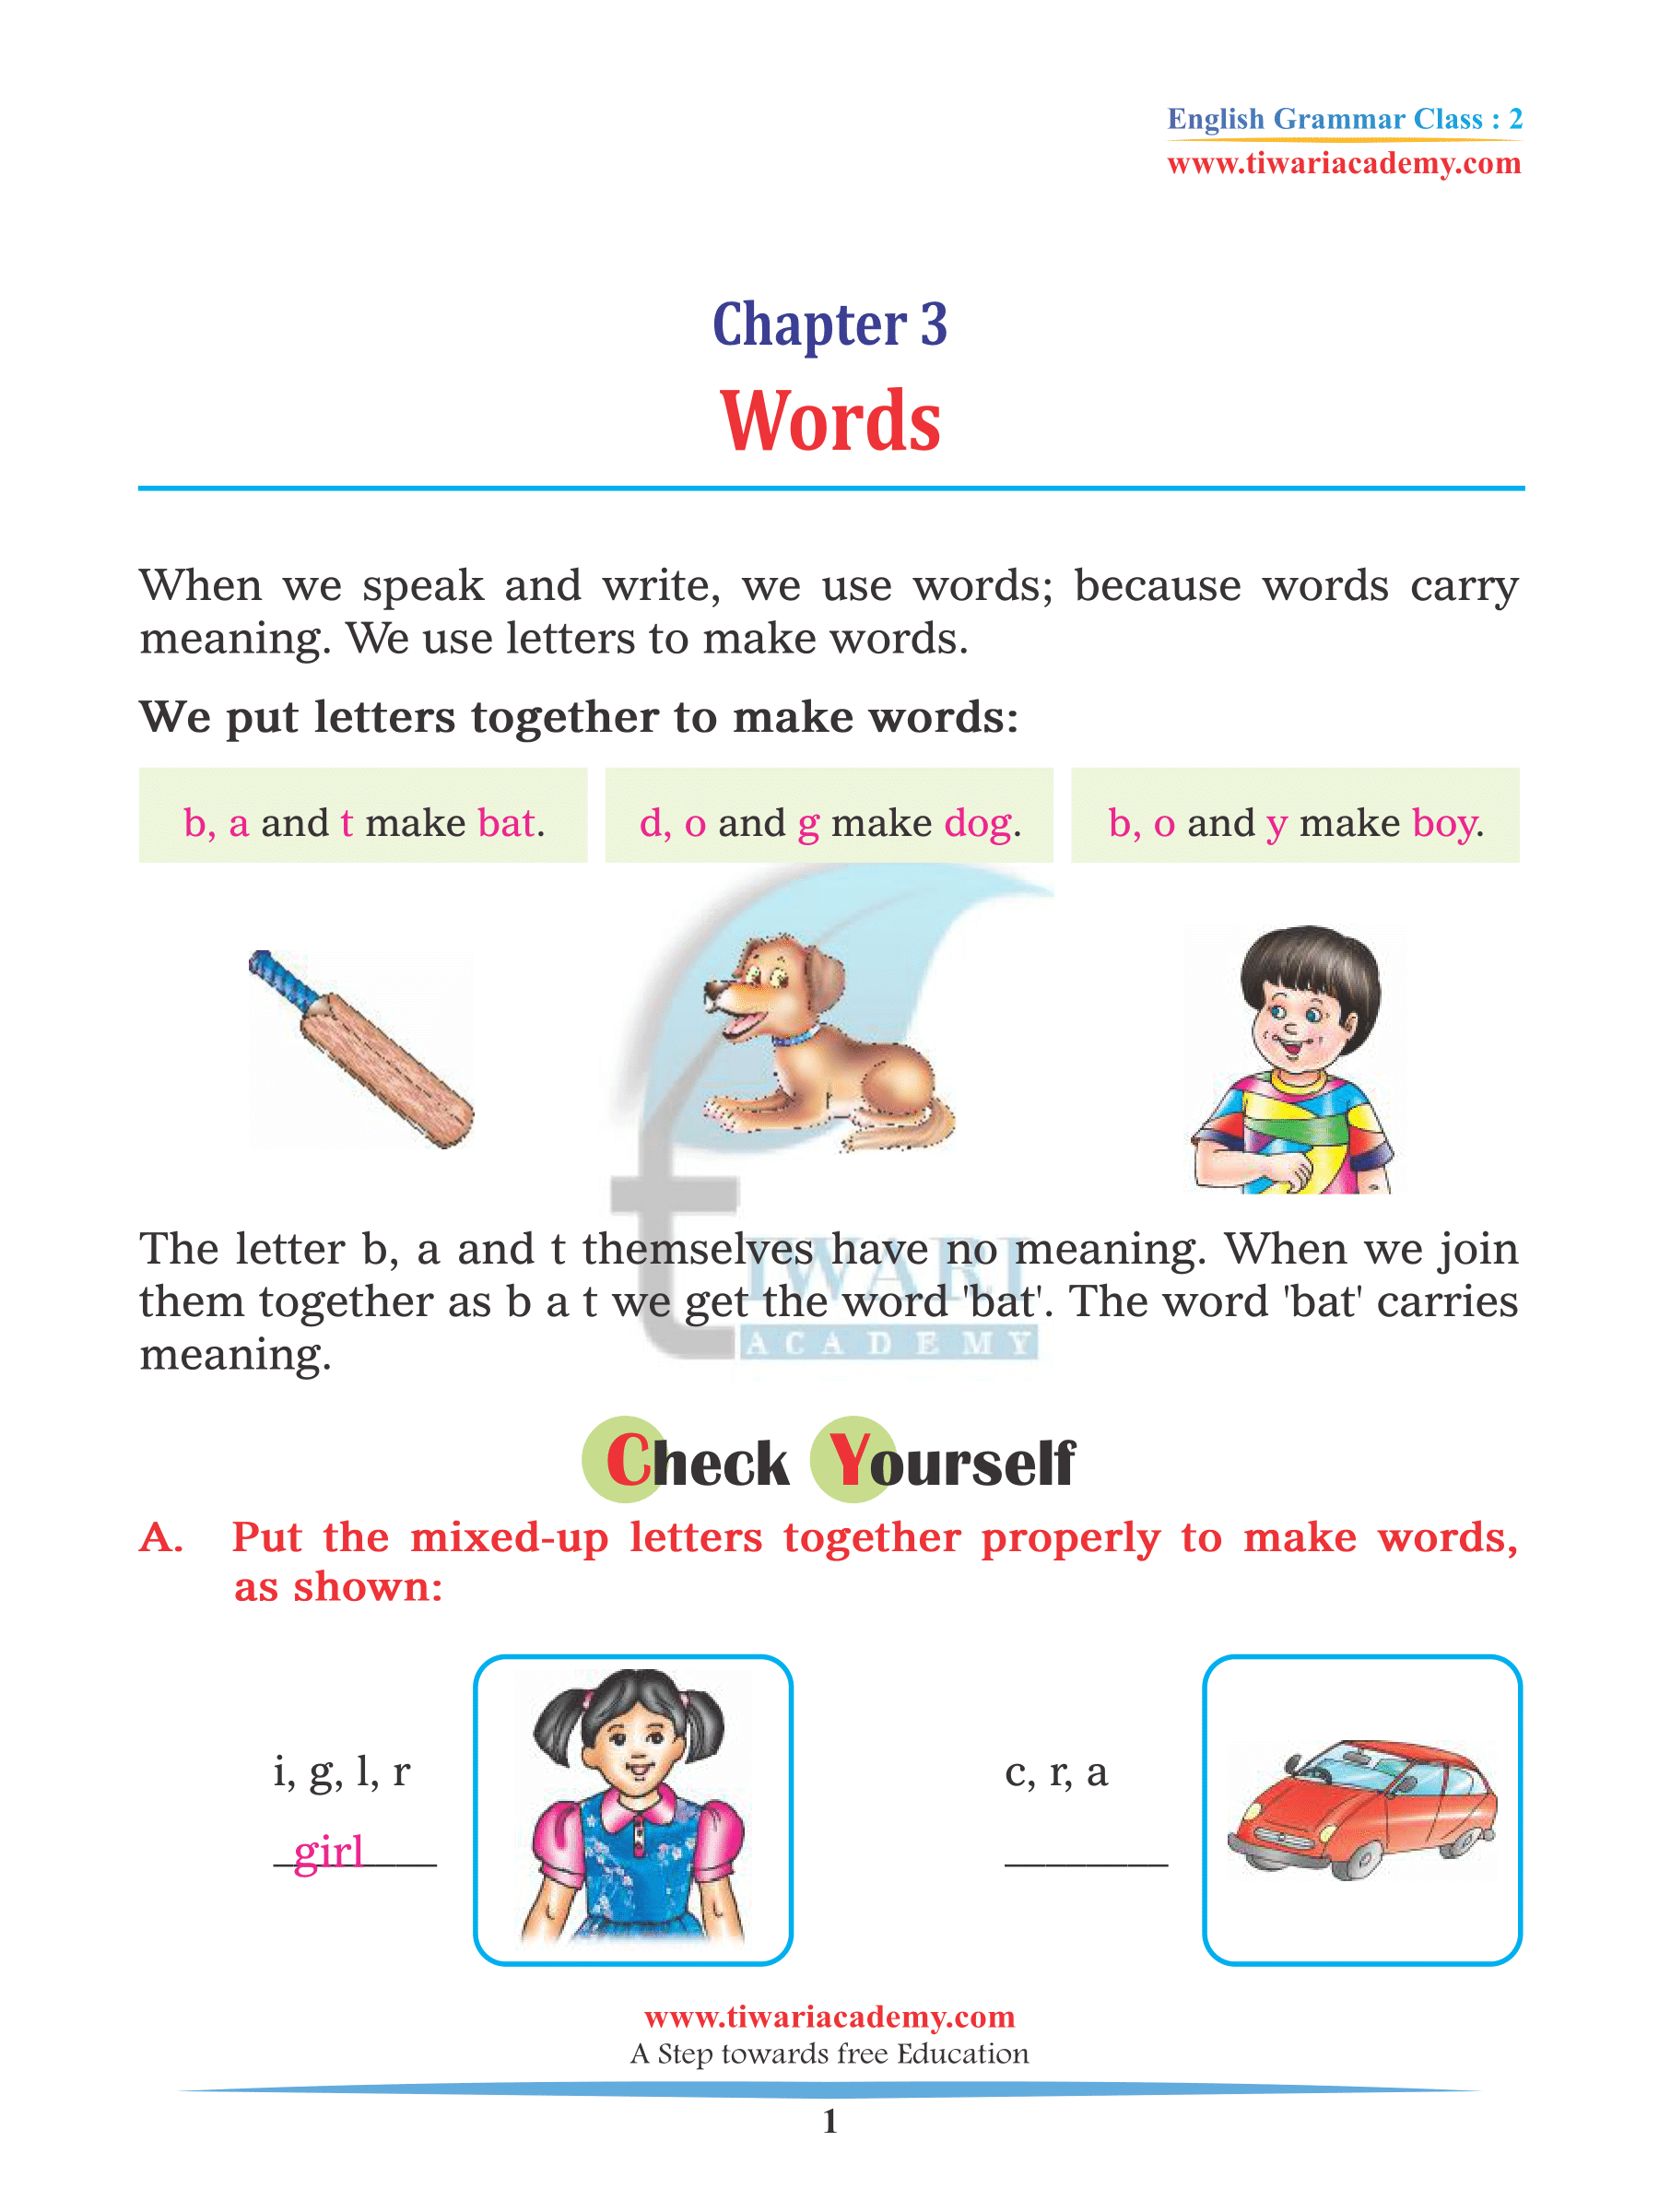 Class 2 English Grammar Chapter 3 Words Practice